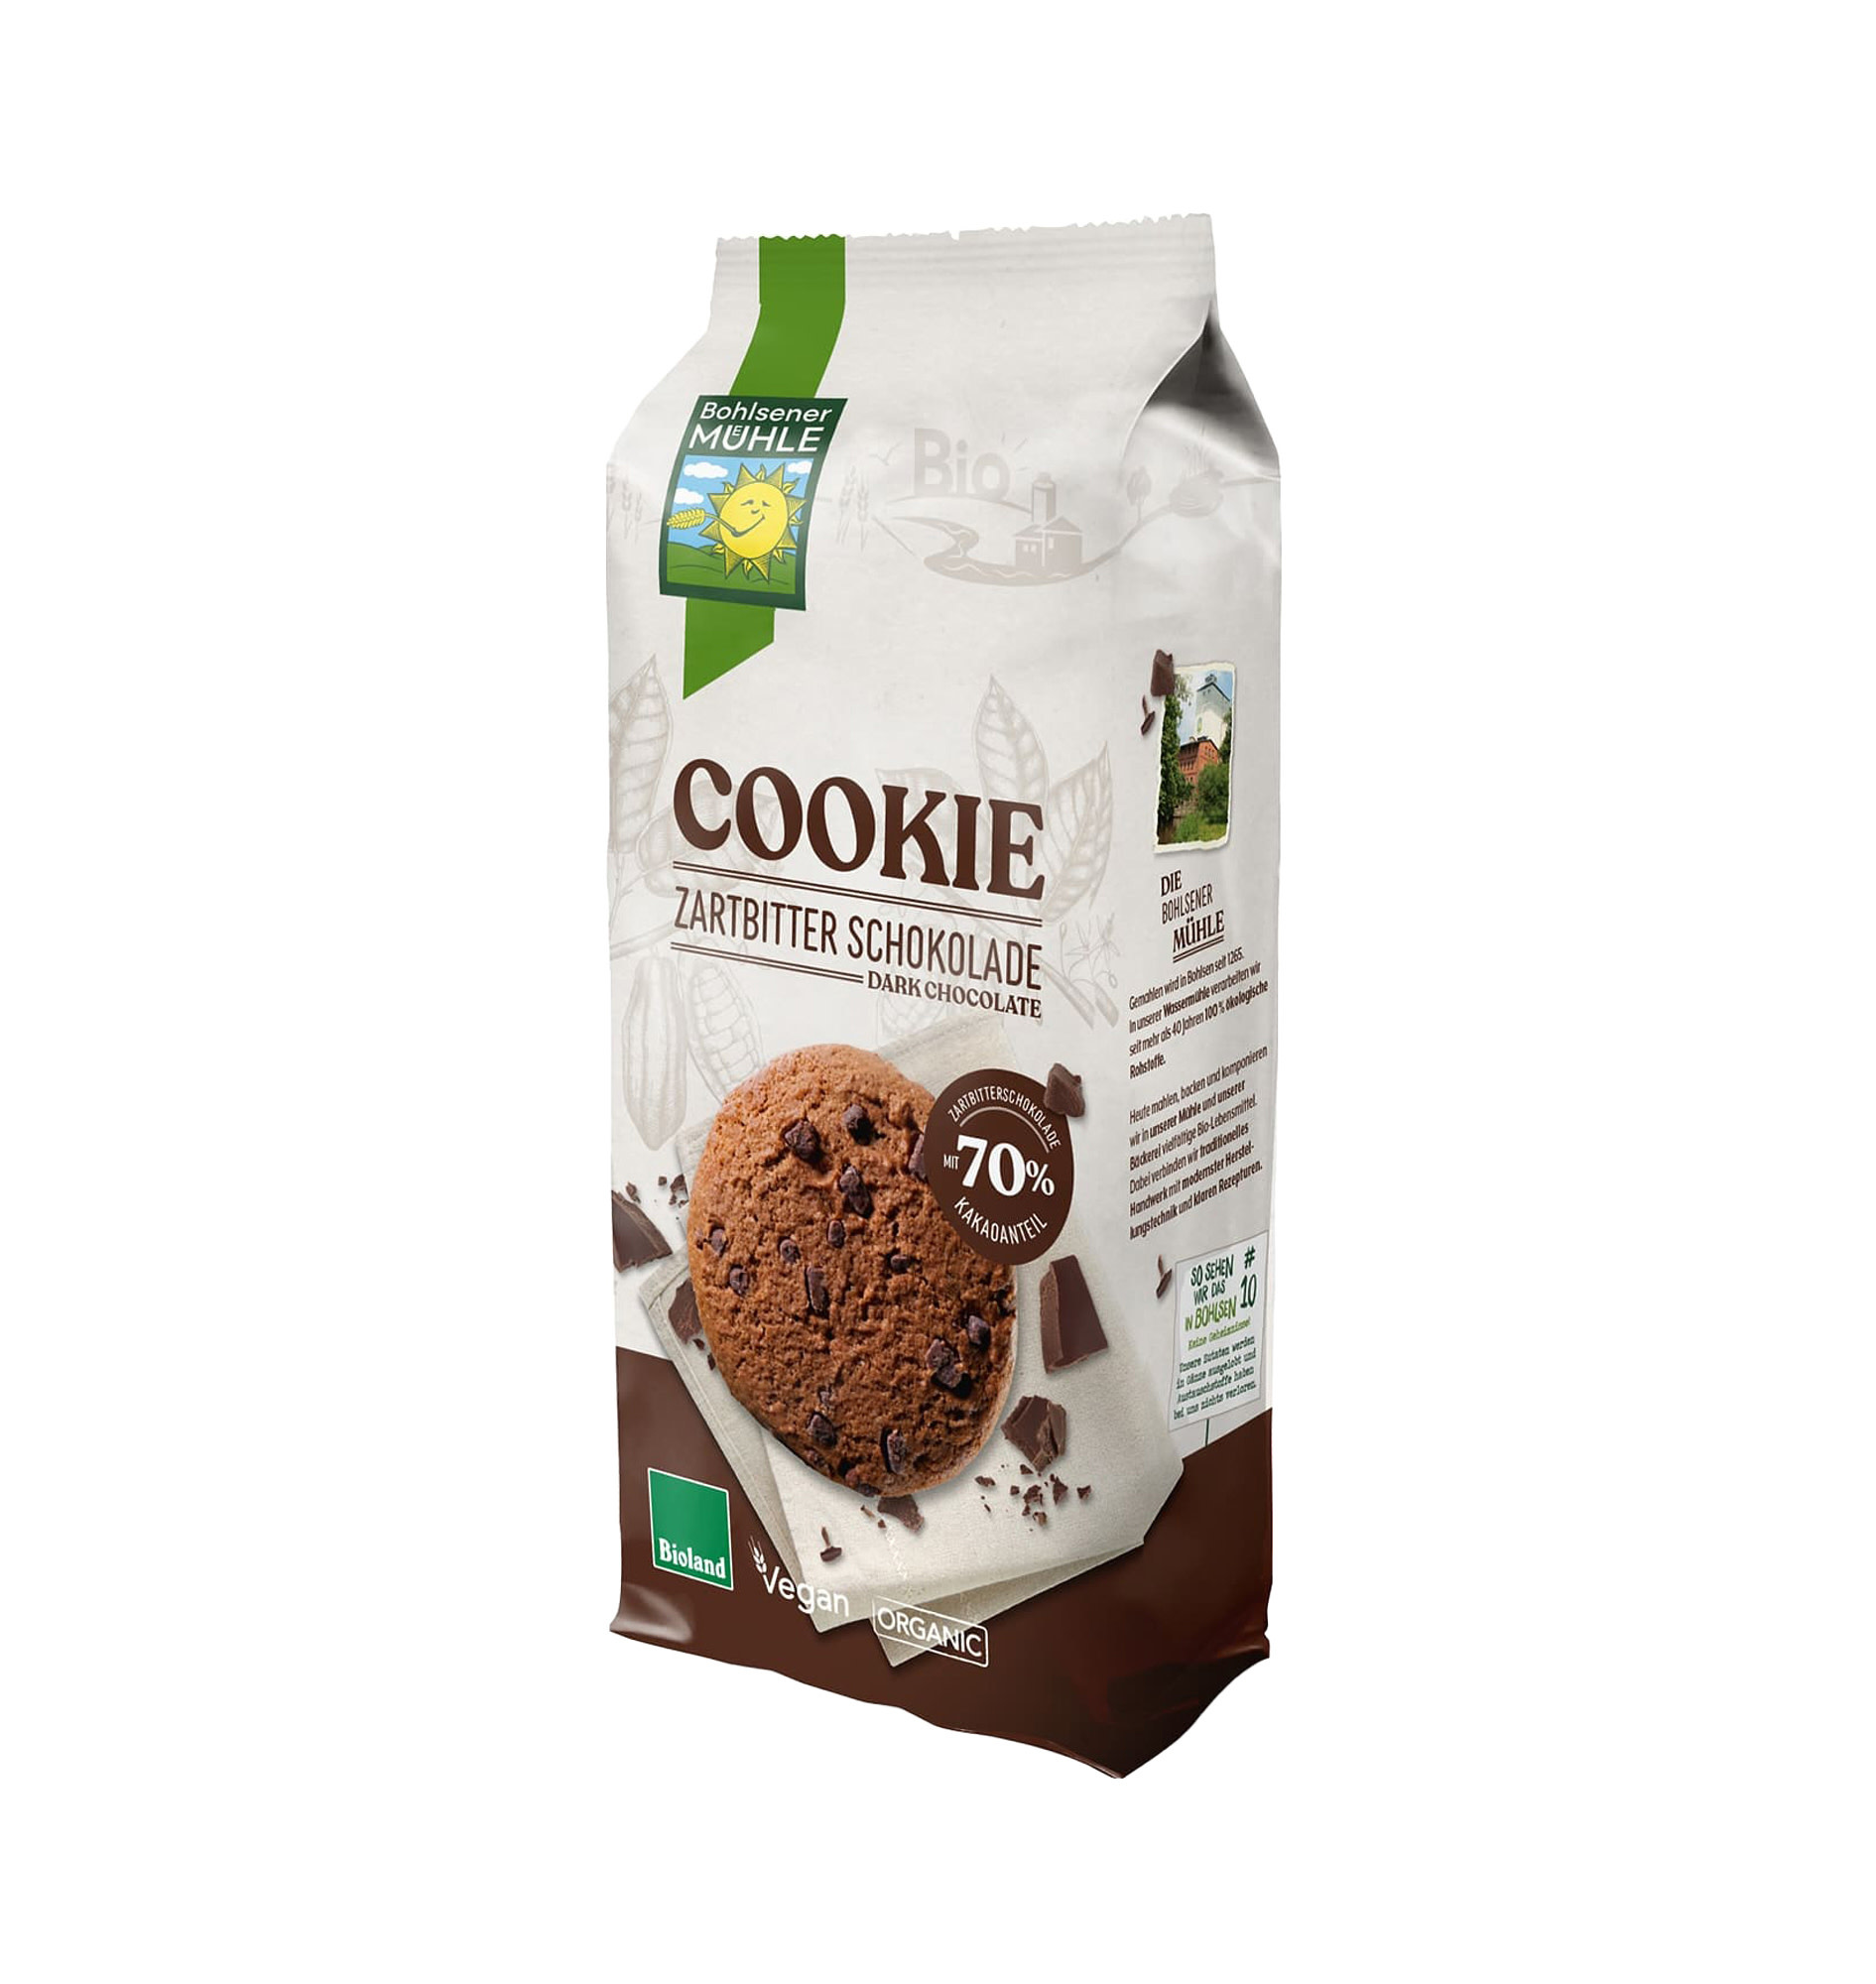 BOHLSENER MÜHLE BOHLSENER MÜHLE Cookie with Dark Chocolate